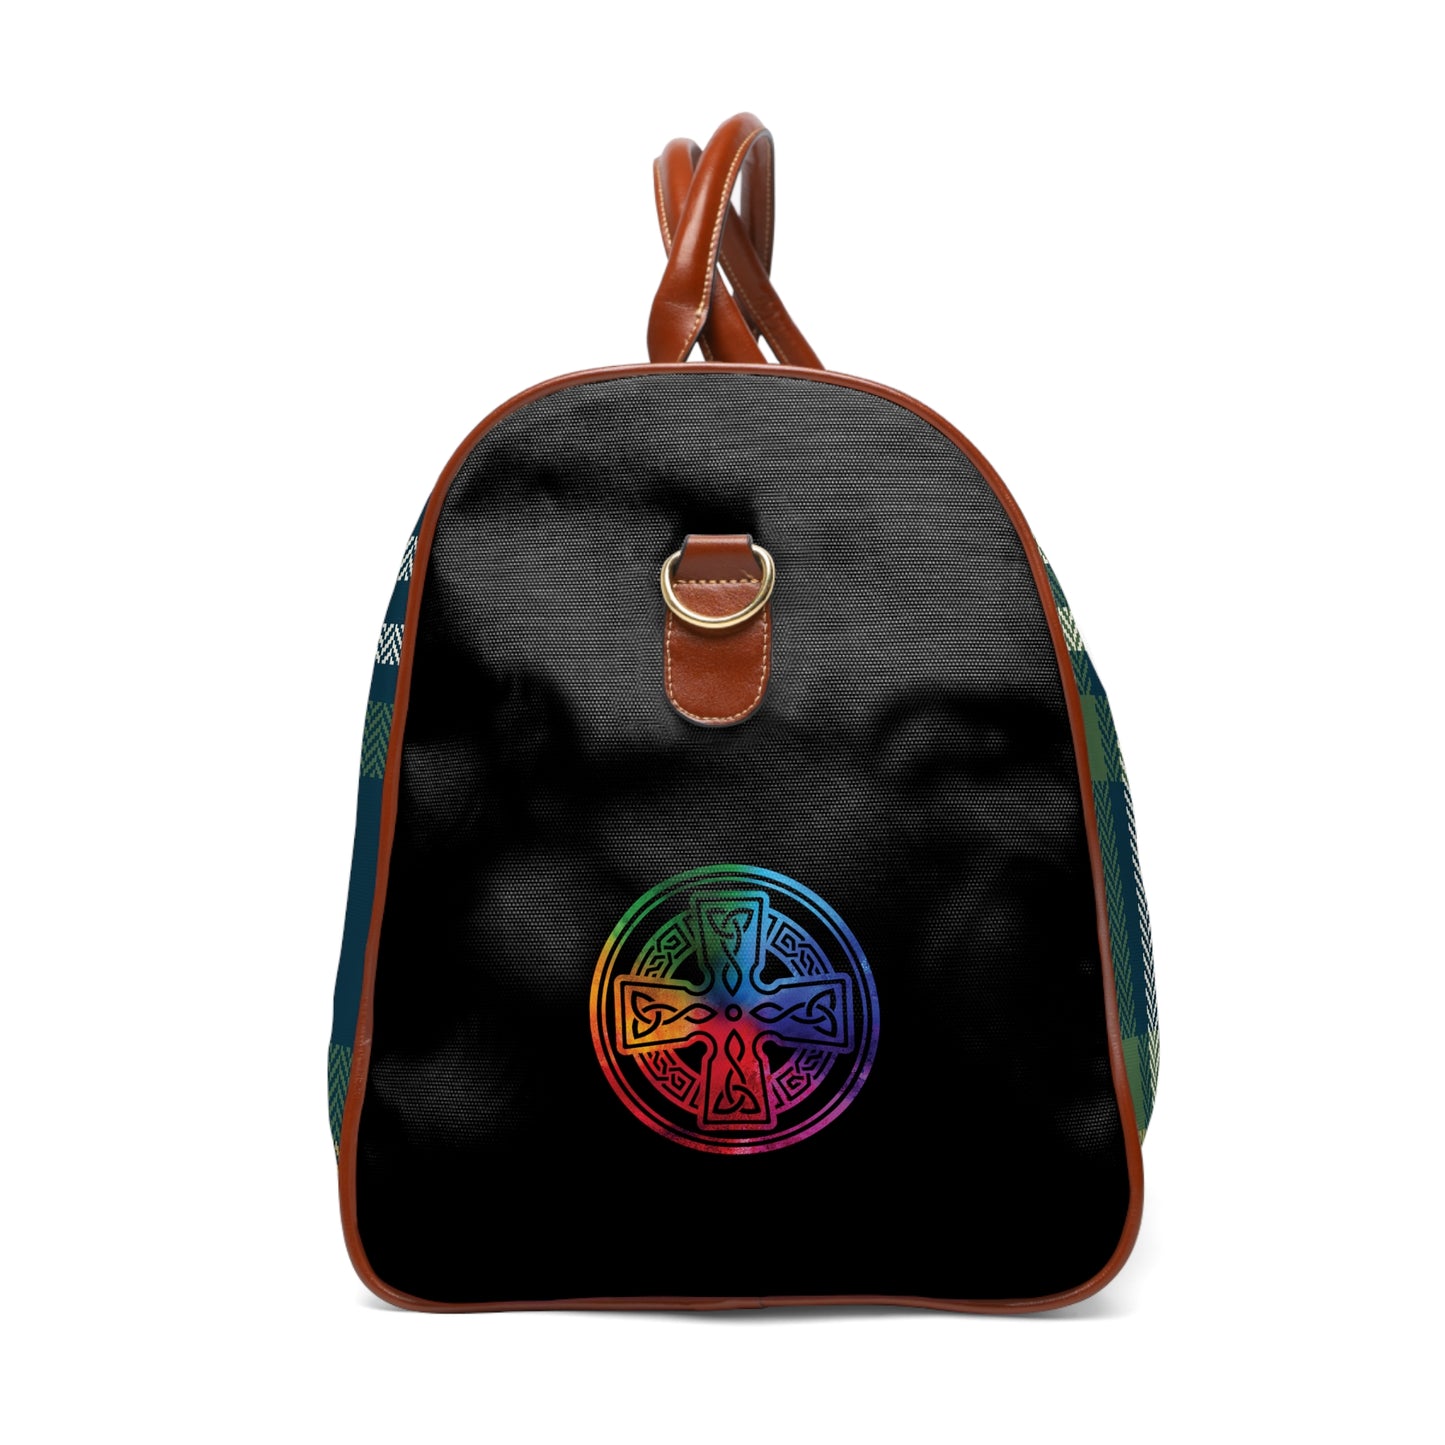 Balbriggan Travel Bag with Pride Celtic Shield